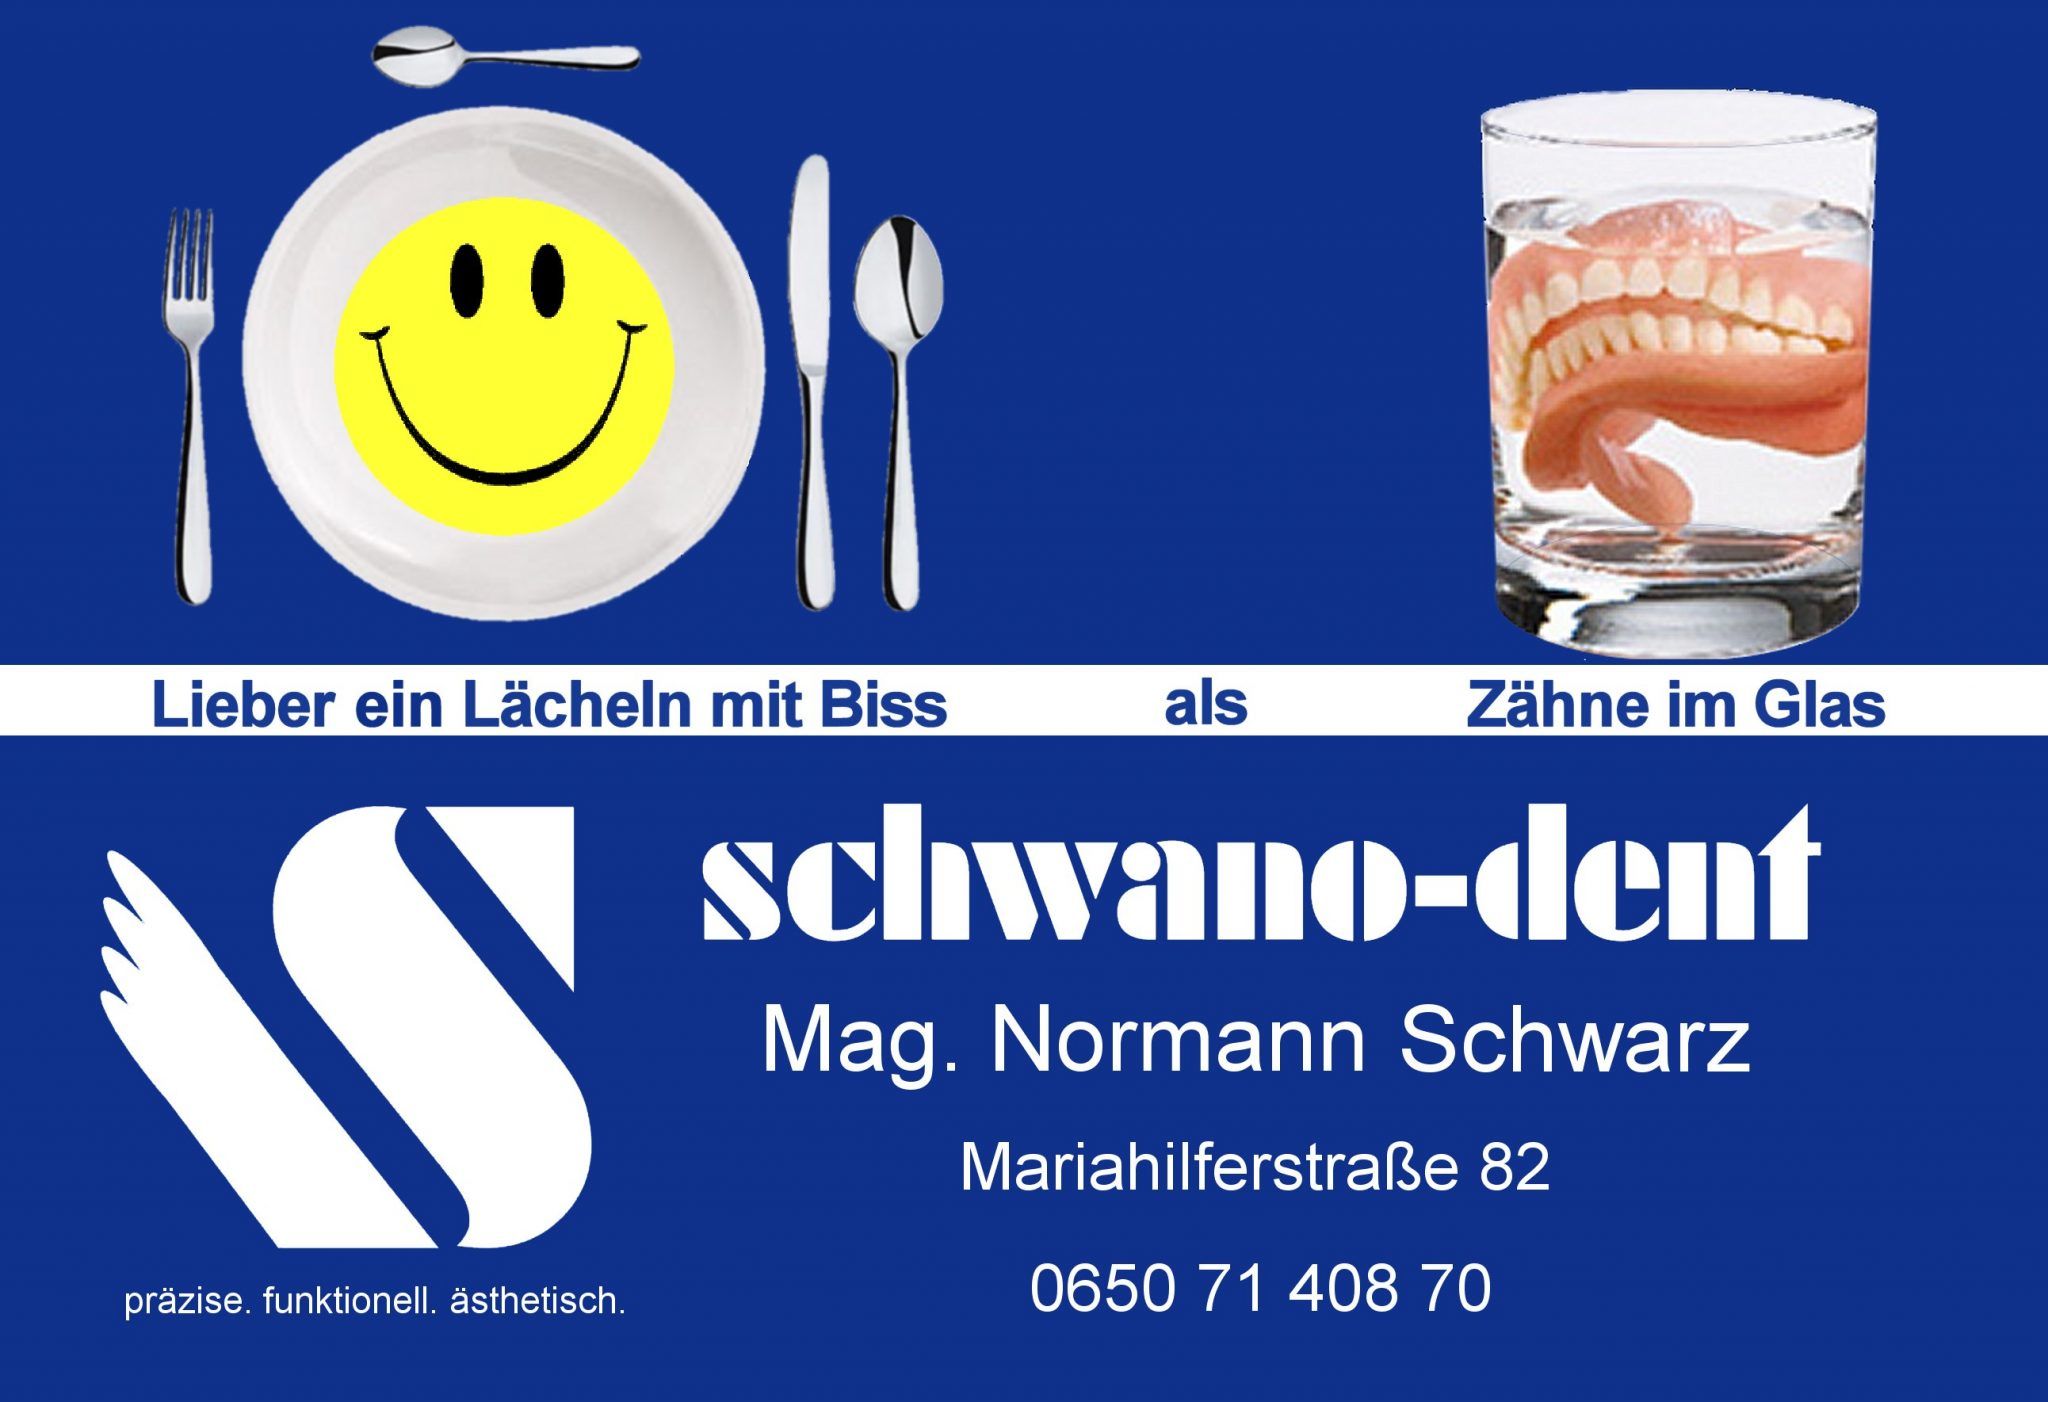 (c) Schwano-dent.at